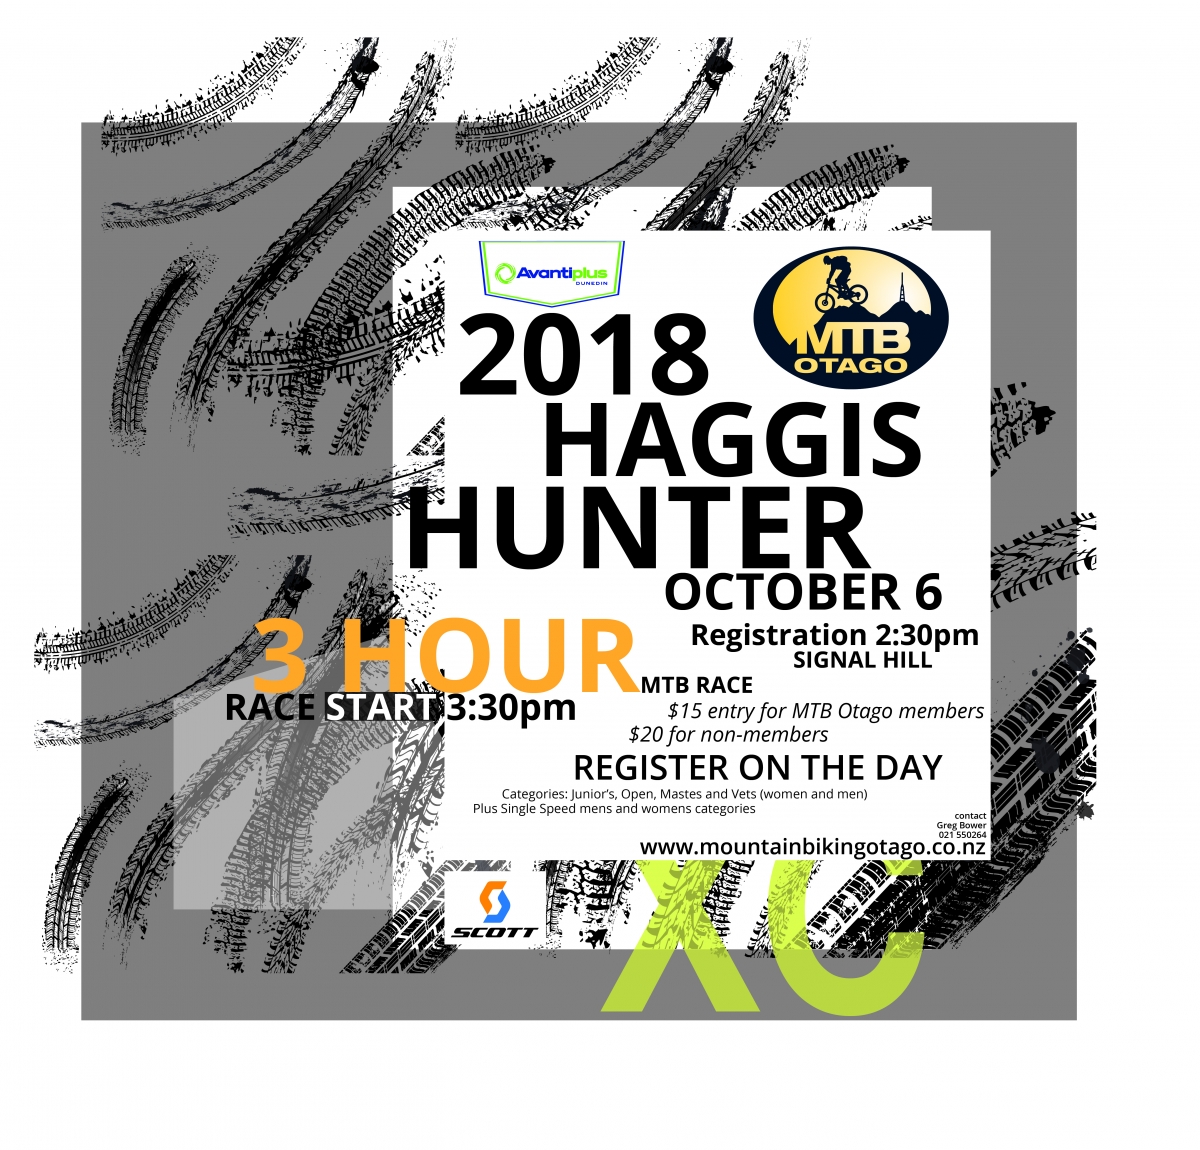 2018 AvantiPlus Haggis Hunter 3 Hour